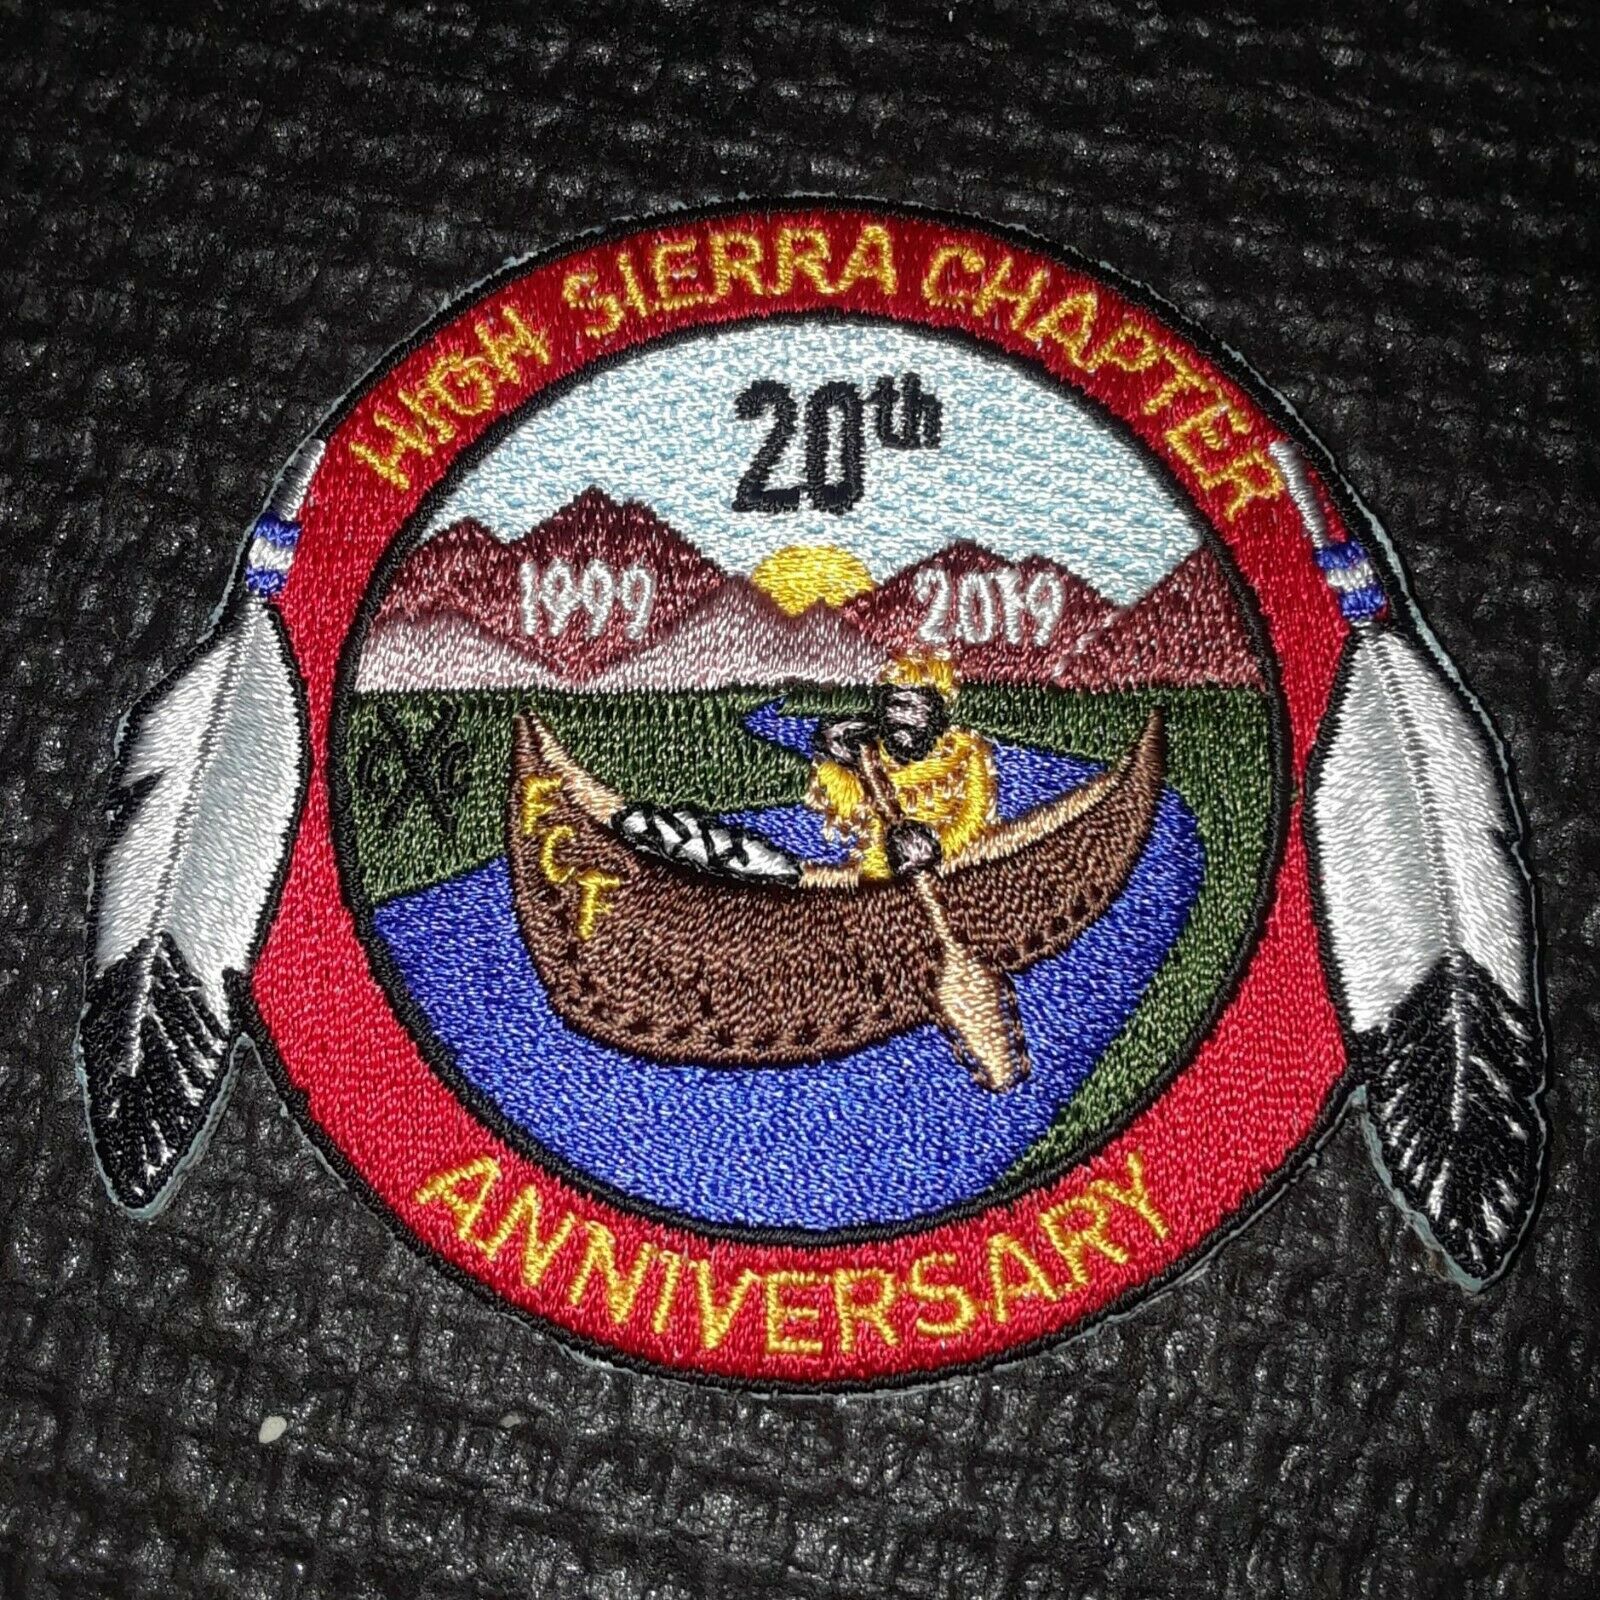 Royal Rangers Patch Fcf High Sierra Chapter 20th Anniv.